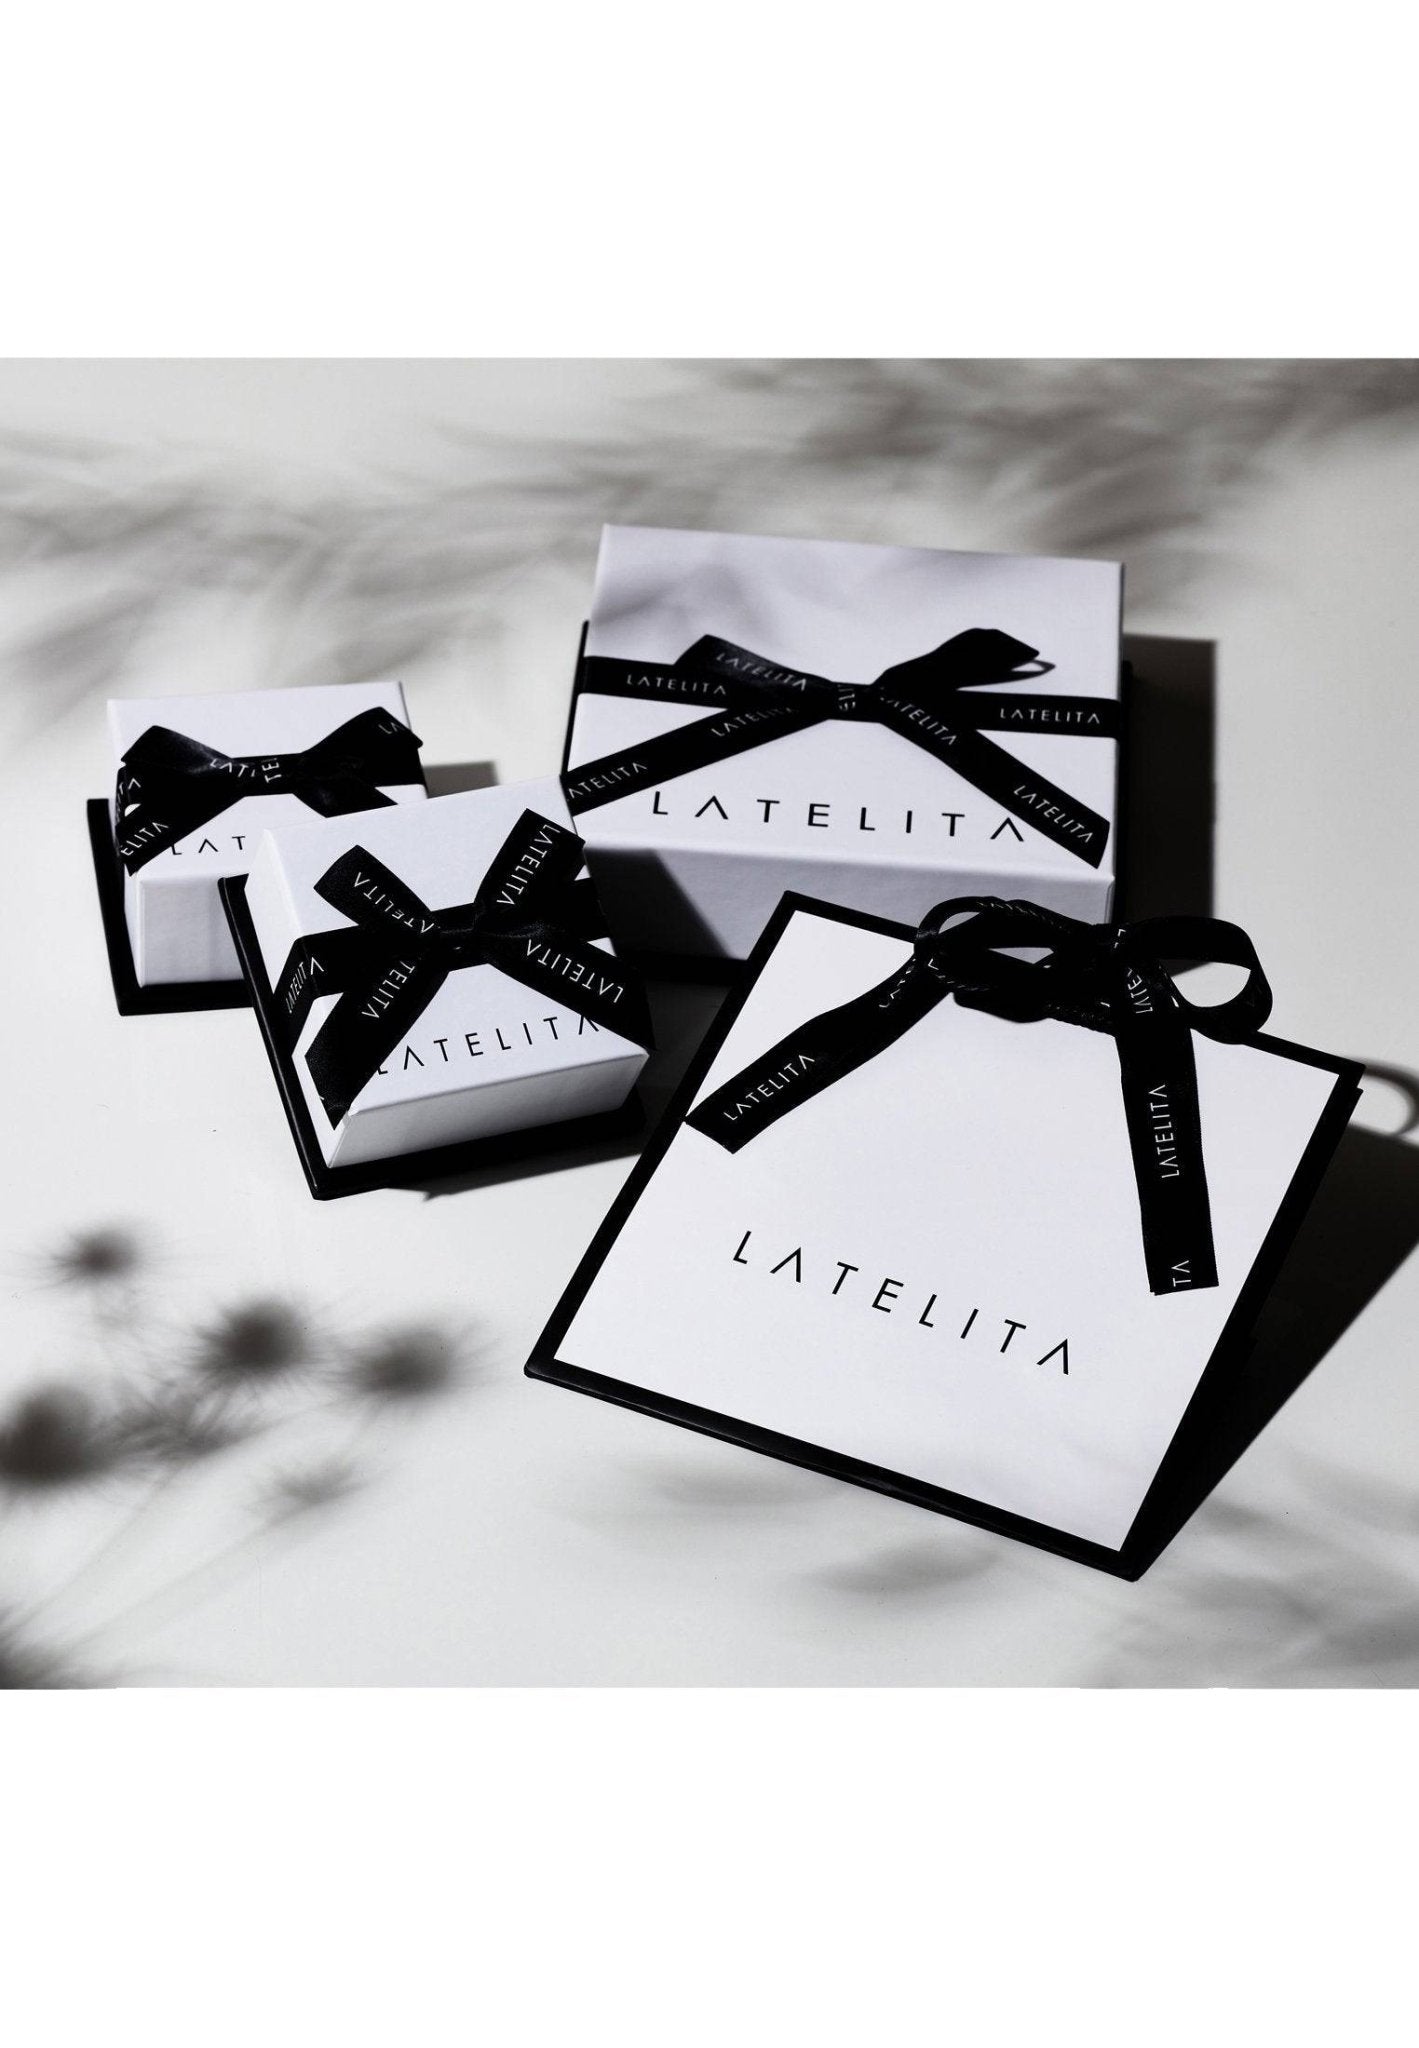 Tassel Chain Earrings Rosegold - LATELITA Earrings